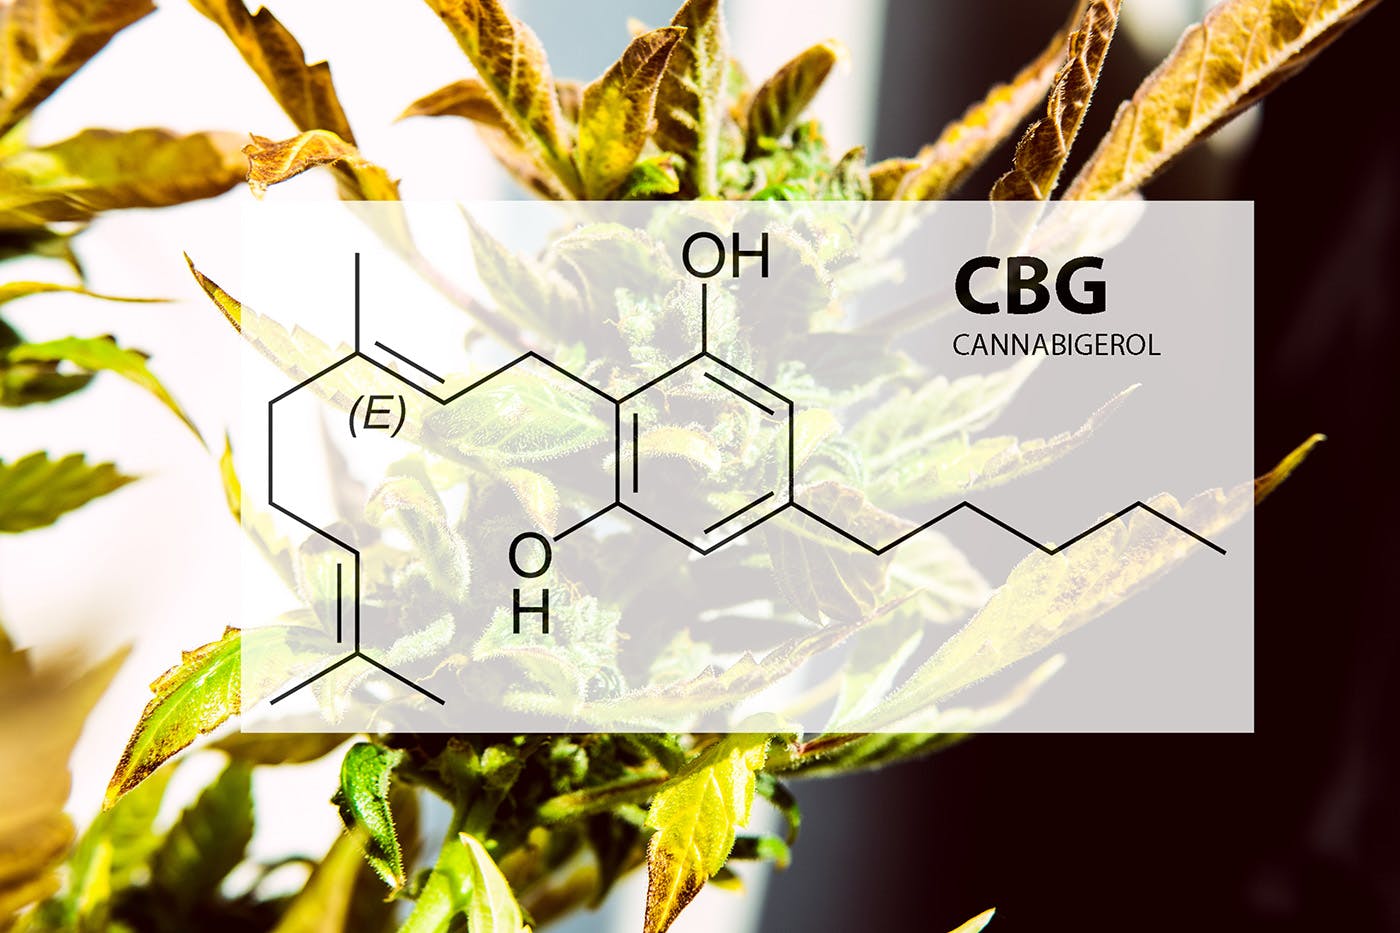 CBG Oil compound illustration with hemp plant background